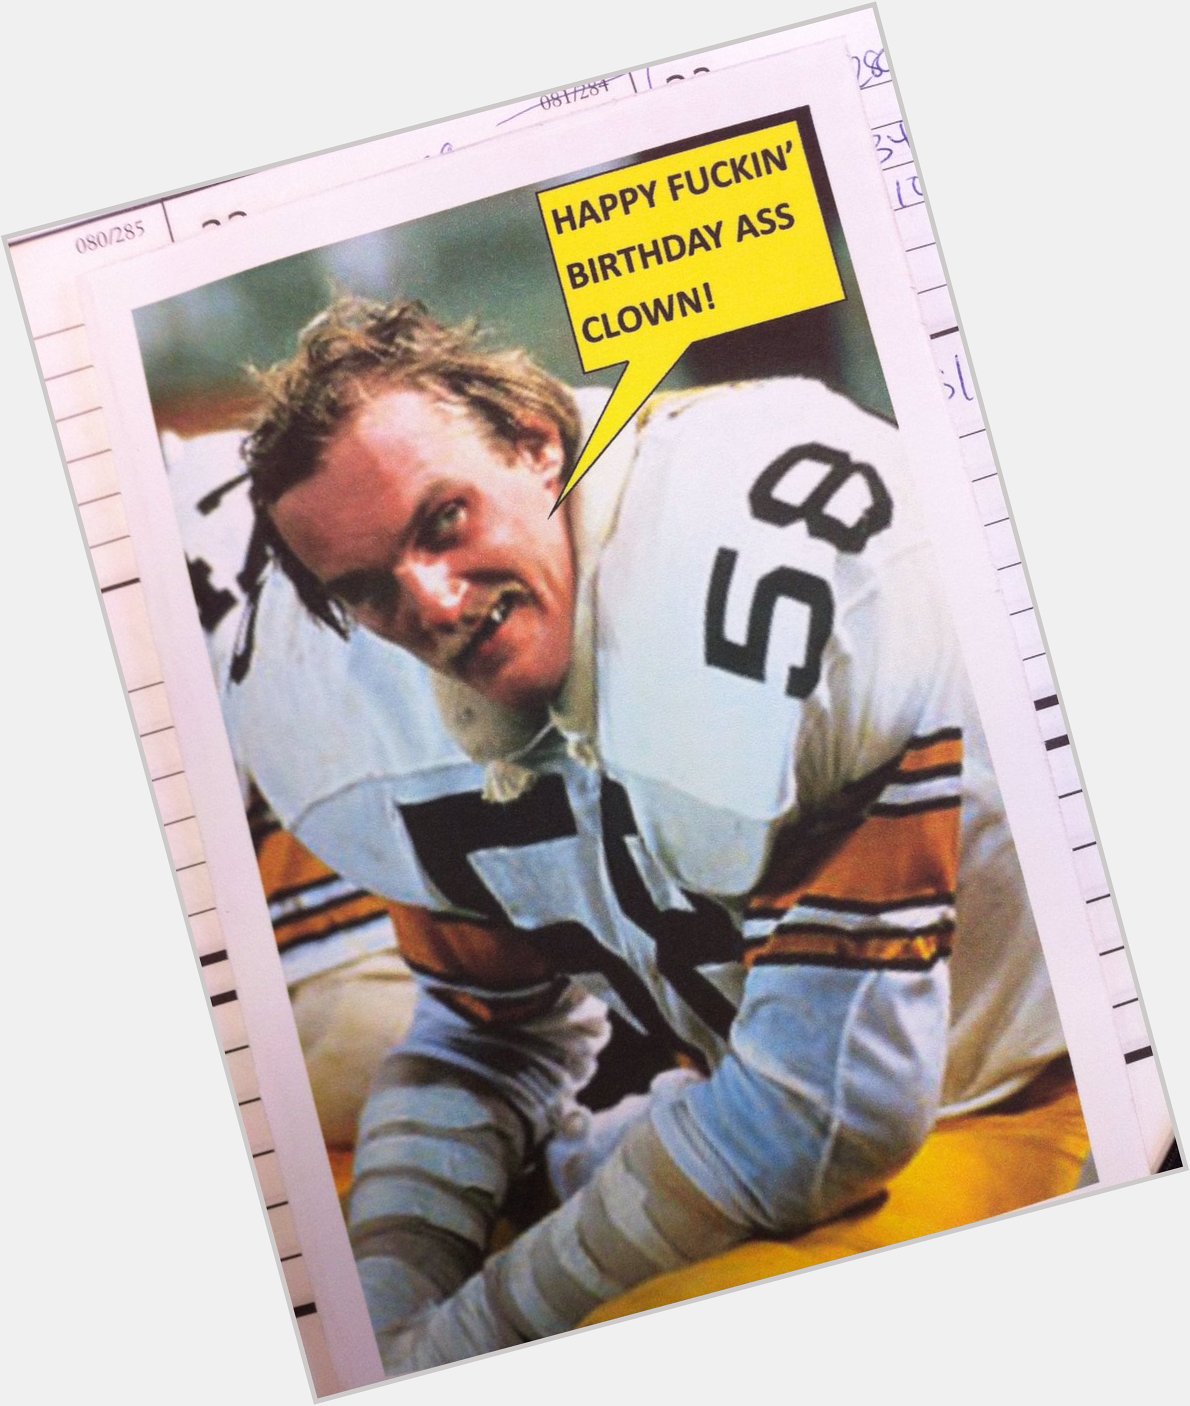 Happy Birthday Steelers and to the best Steeler, Jack Lambert 